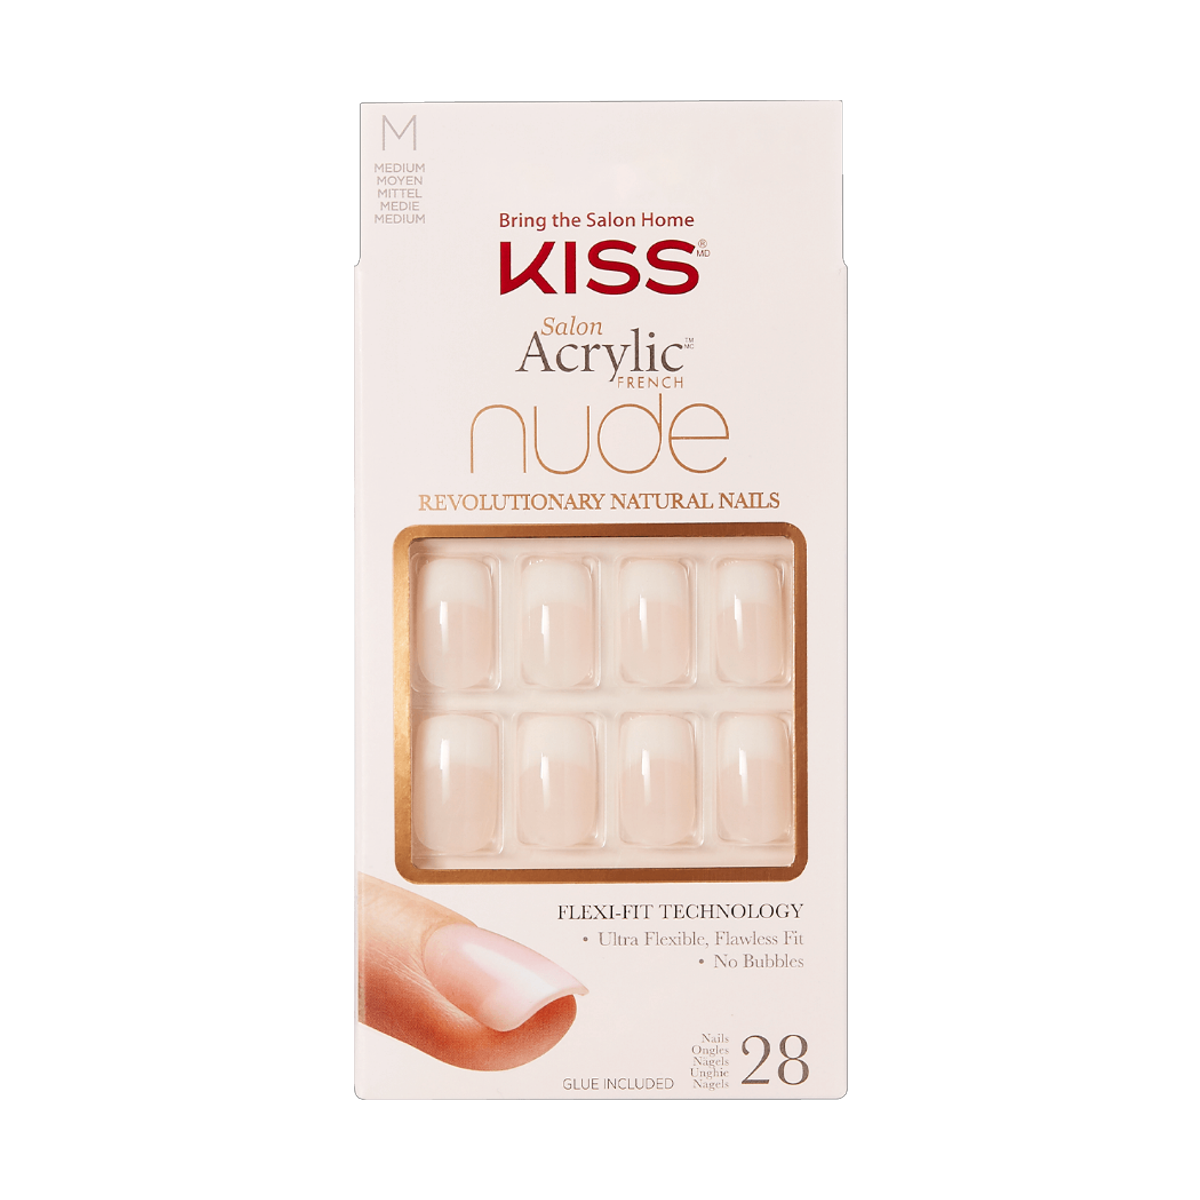 Kiss Salon Acrylic Nude Nails Cashmere